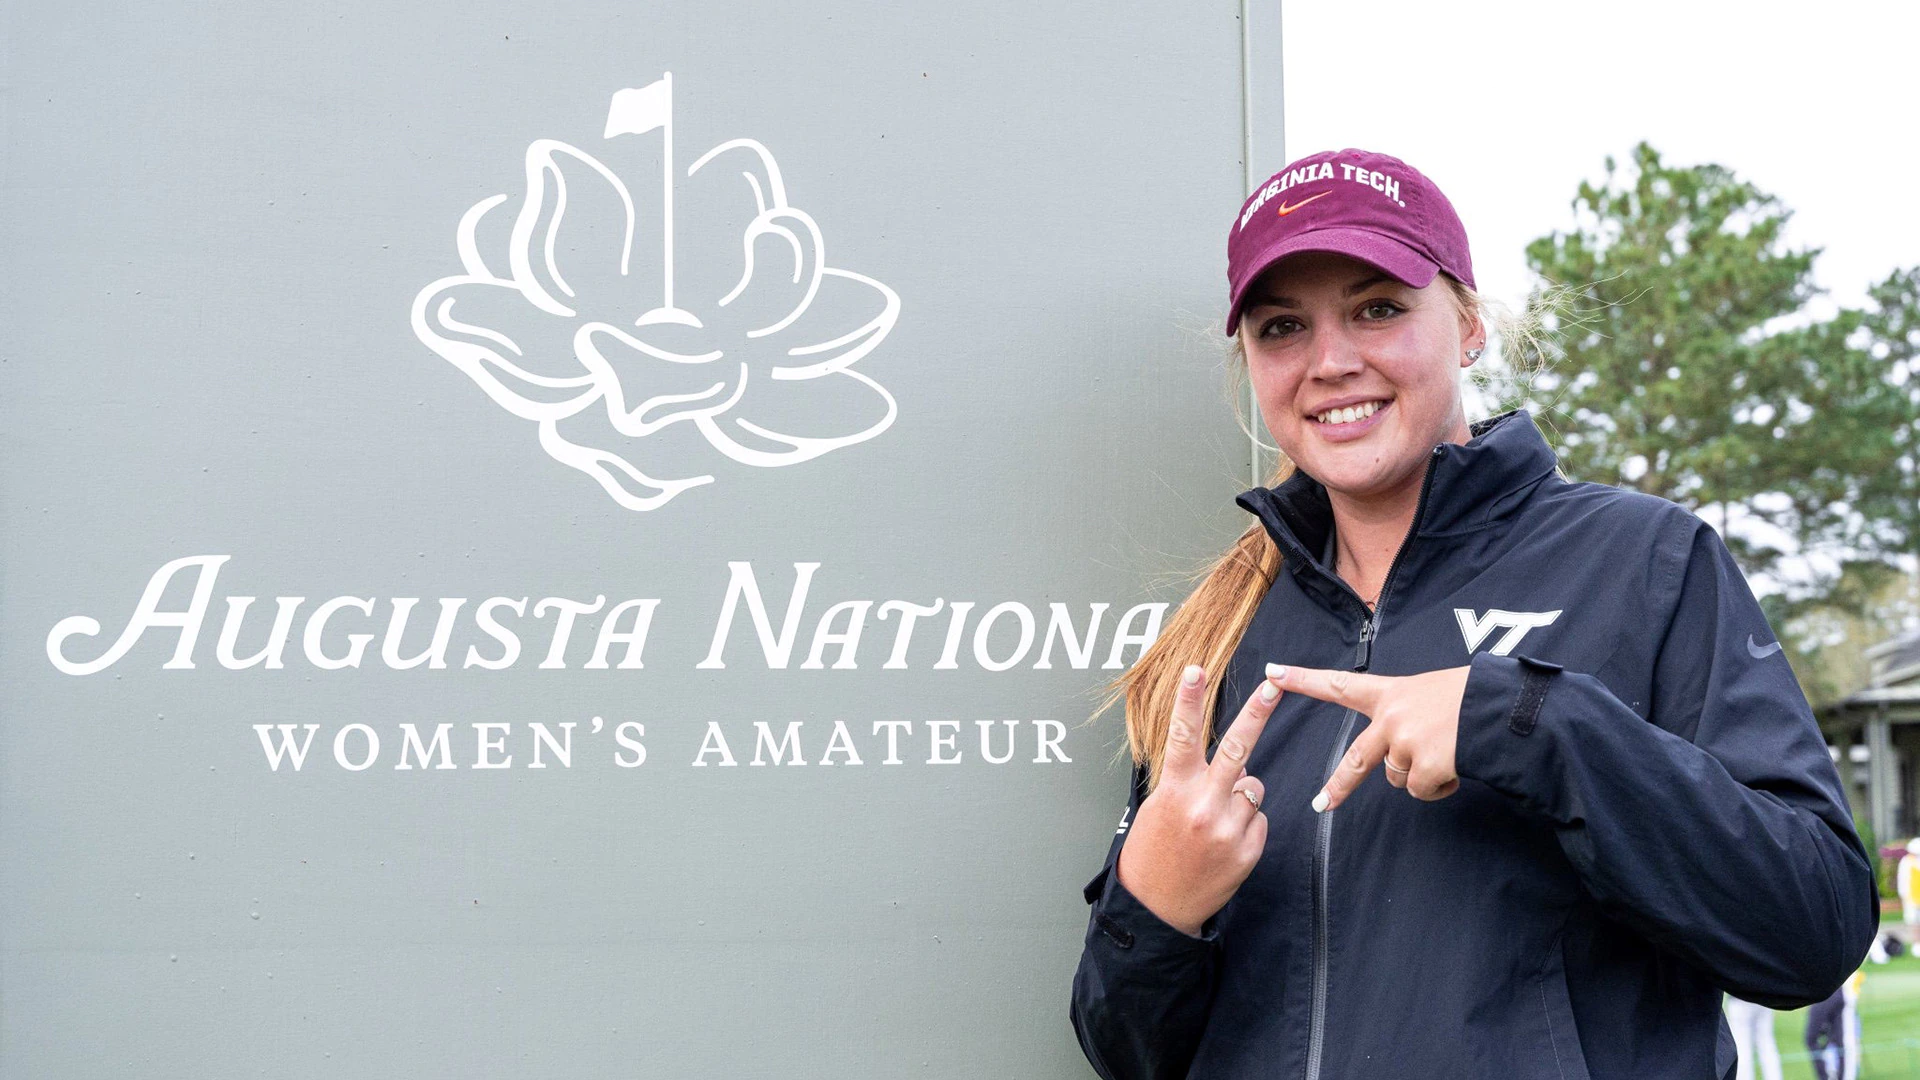 Virginia Tech’s Emily Mahar reunites with parents at Augusta National Women’s Amateur